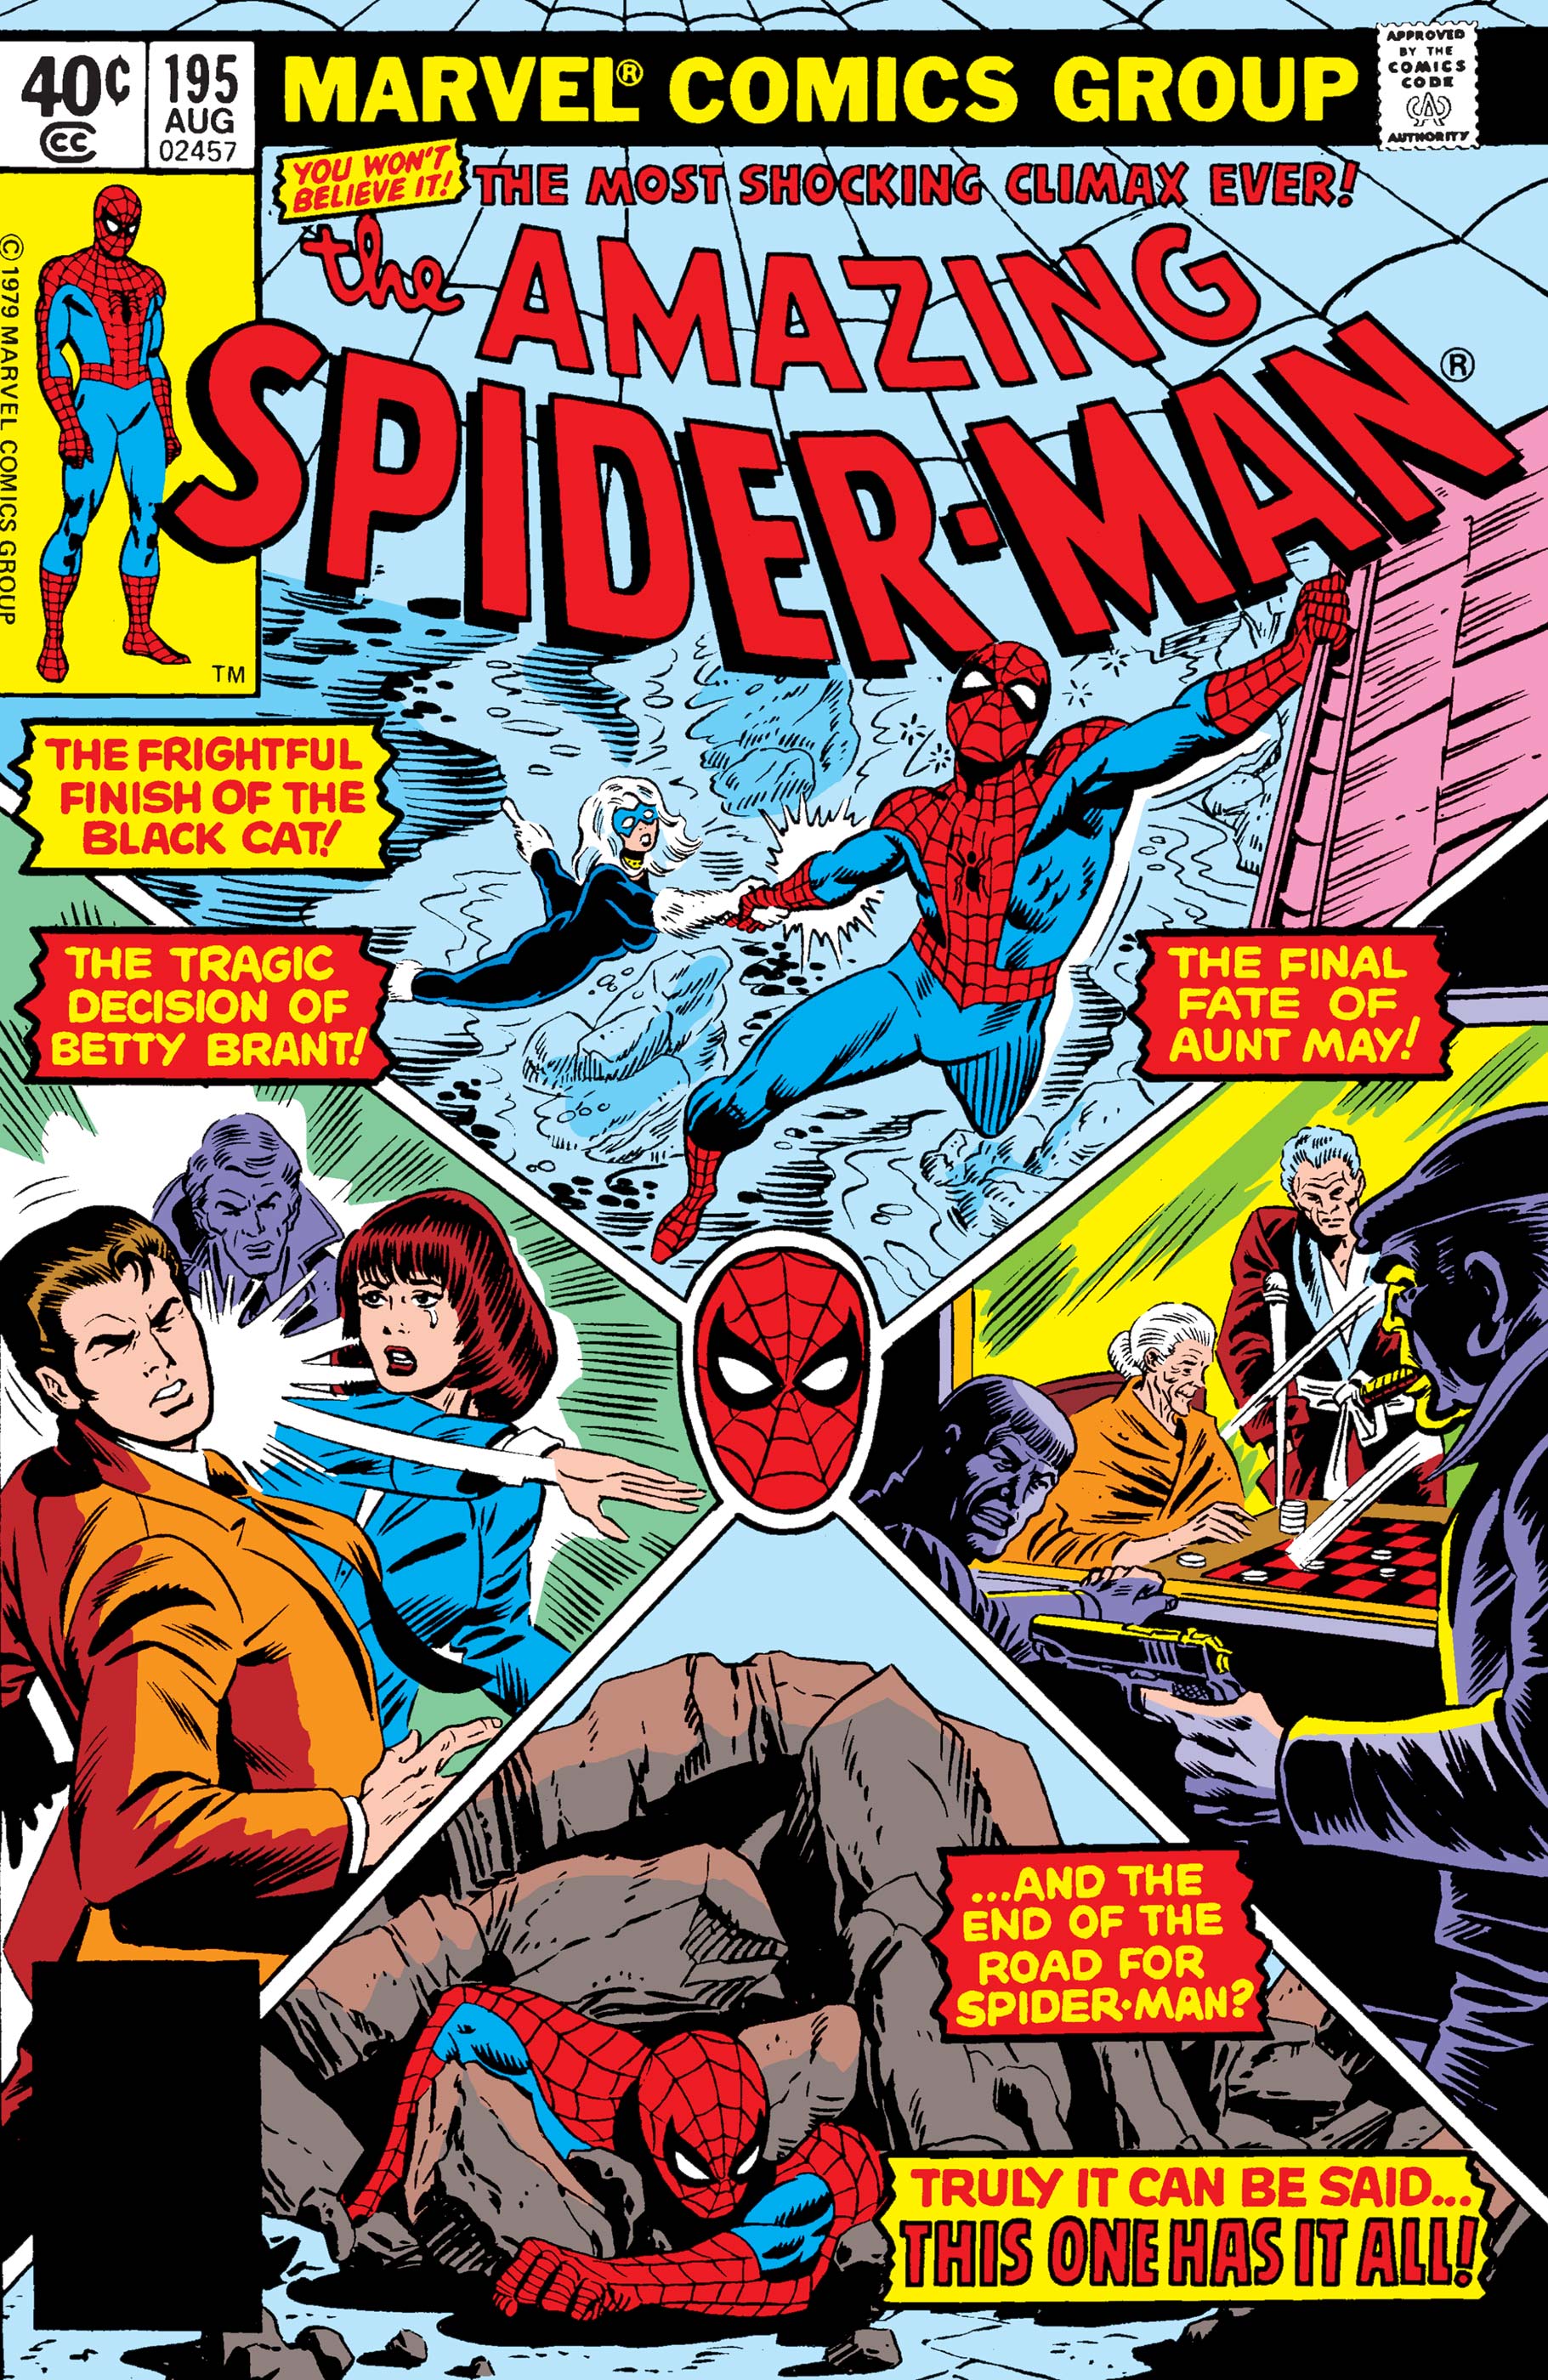 The Amazing Spider-Man (1963) #195